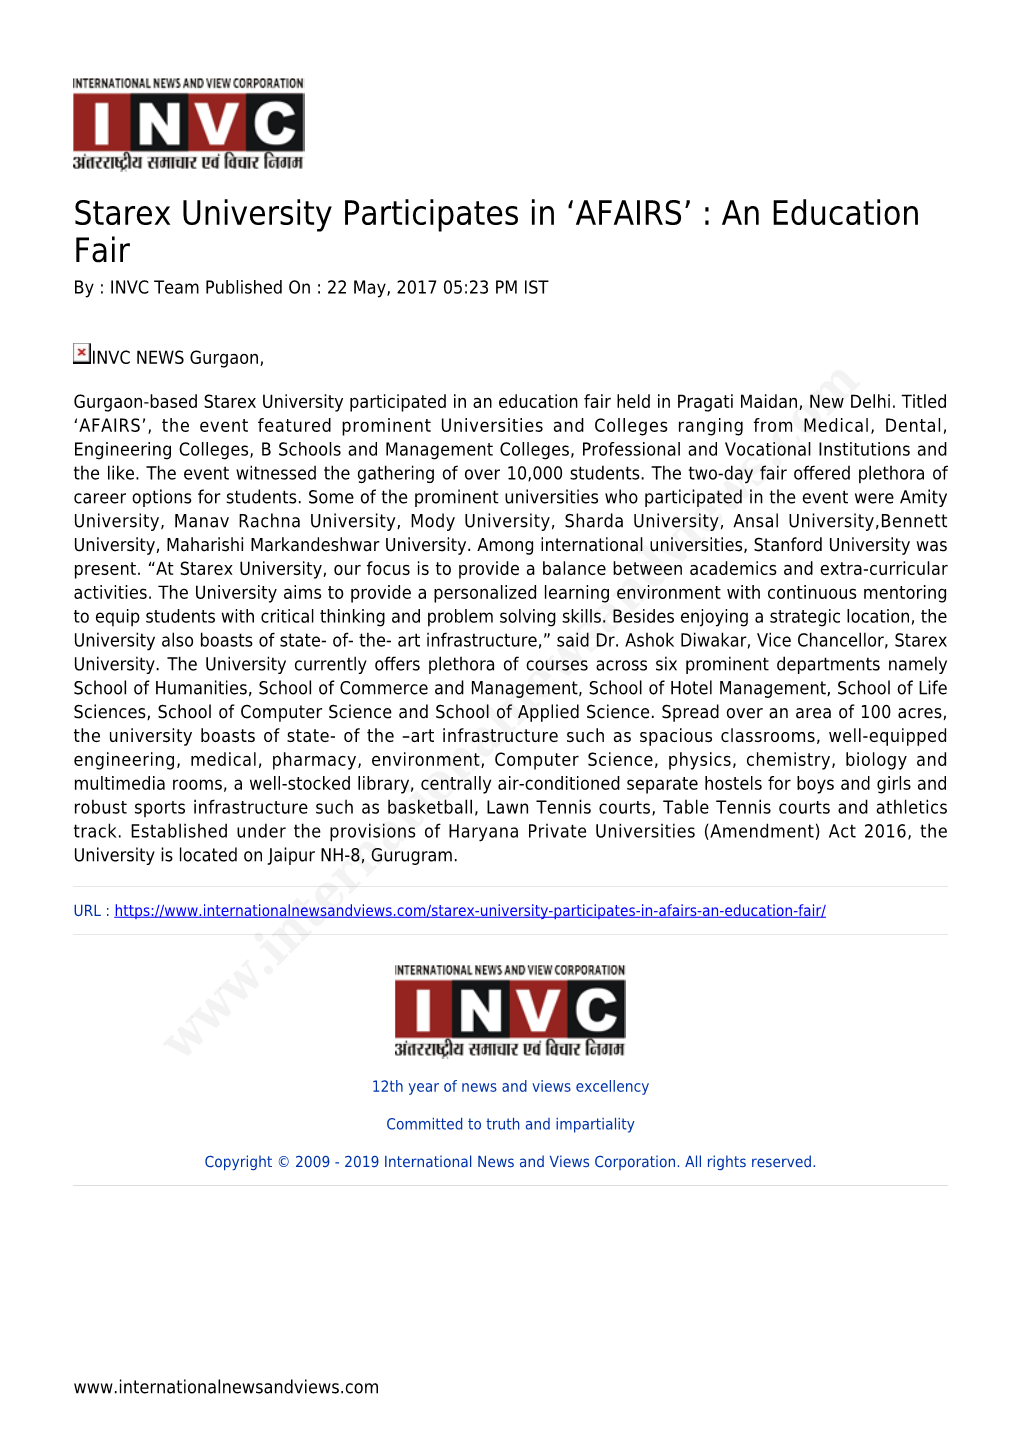 Starex University Participates in 'AFAIRS' : an Education Fair